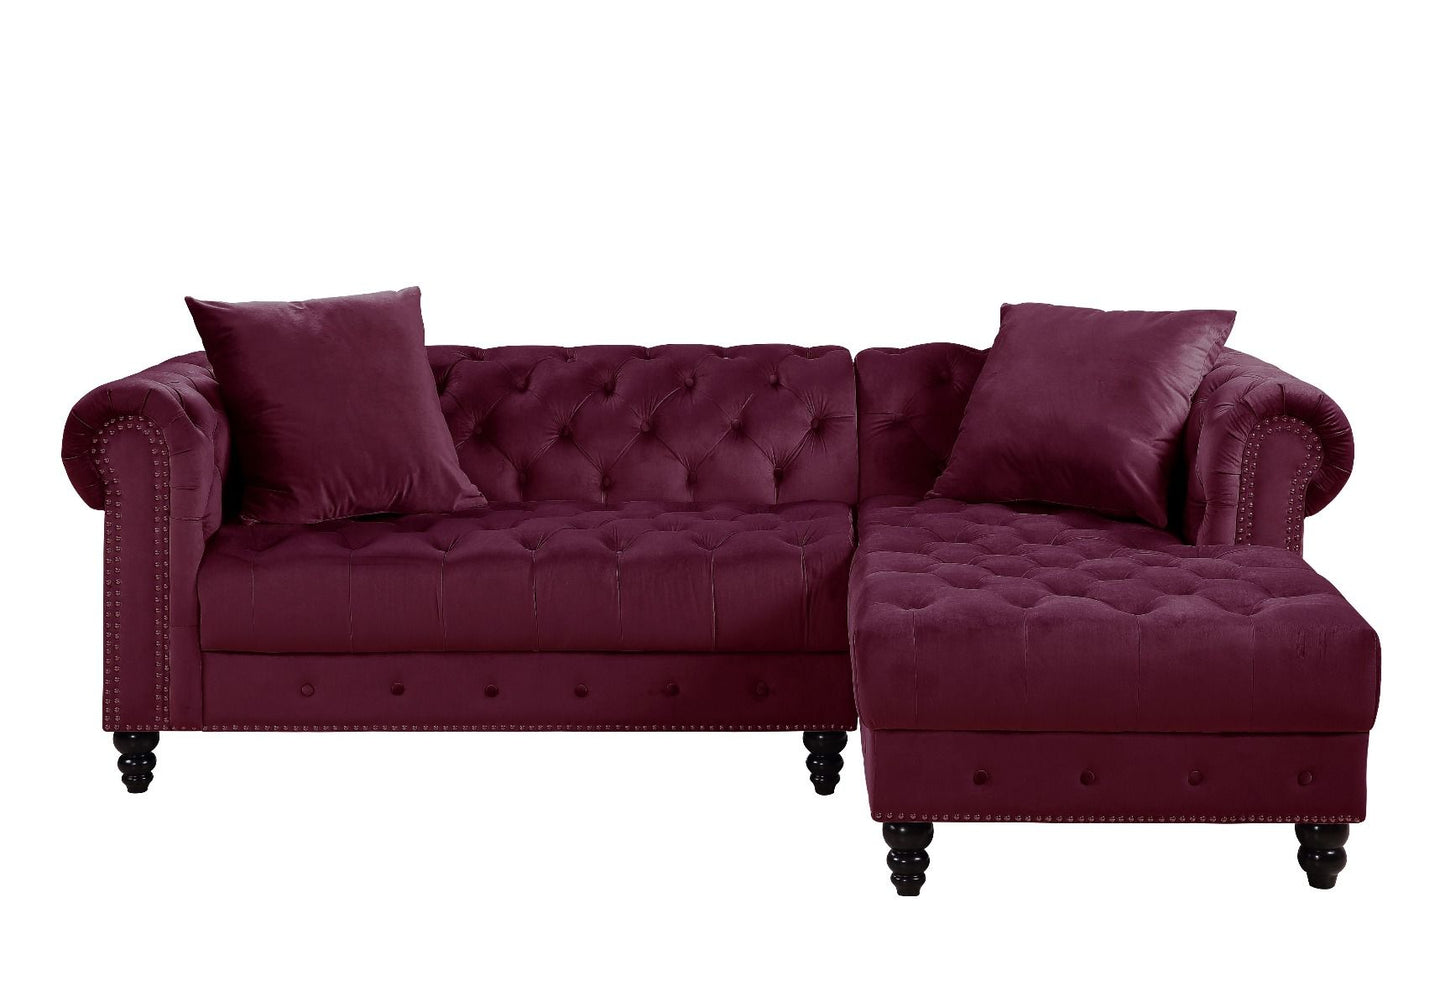 Adnelis 57315 Velvet Sectional Sofa by Acme